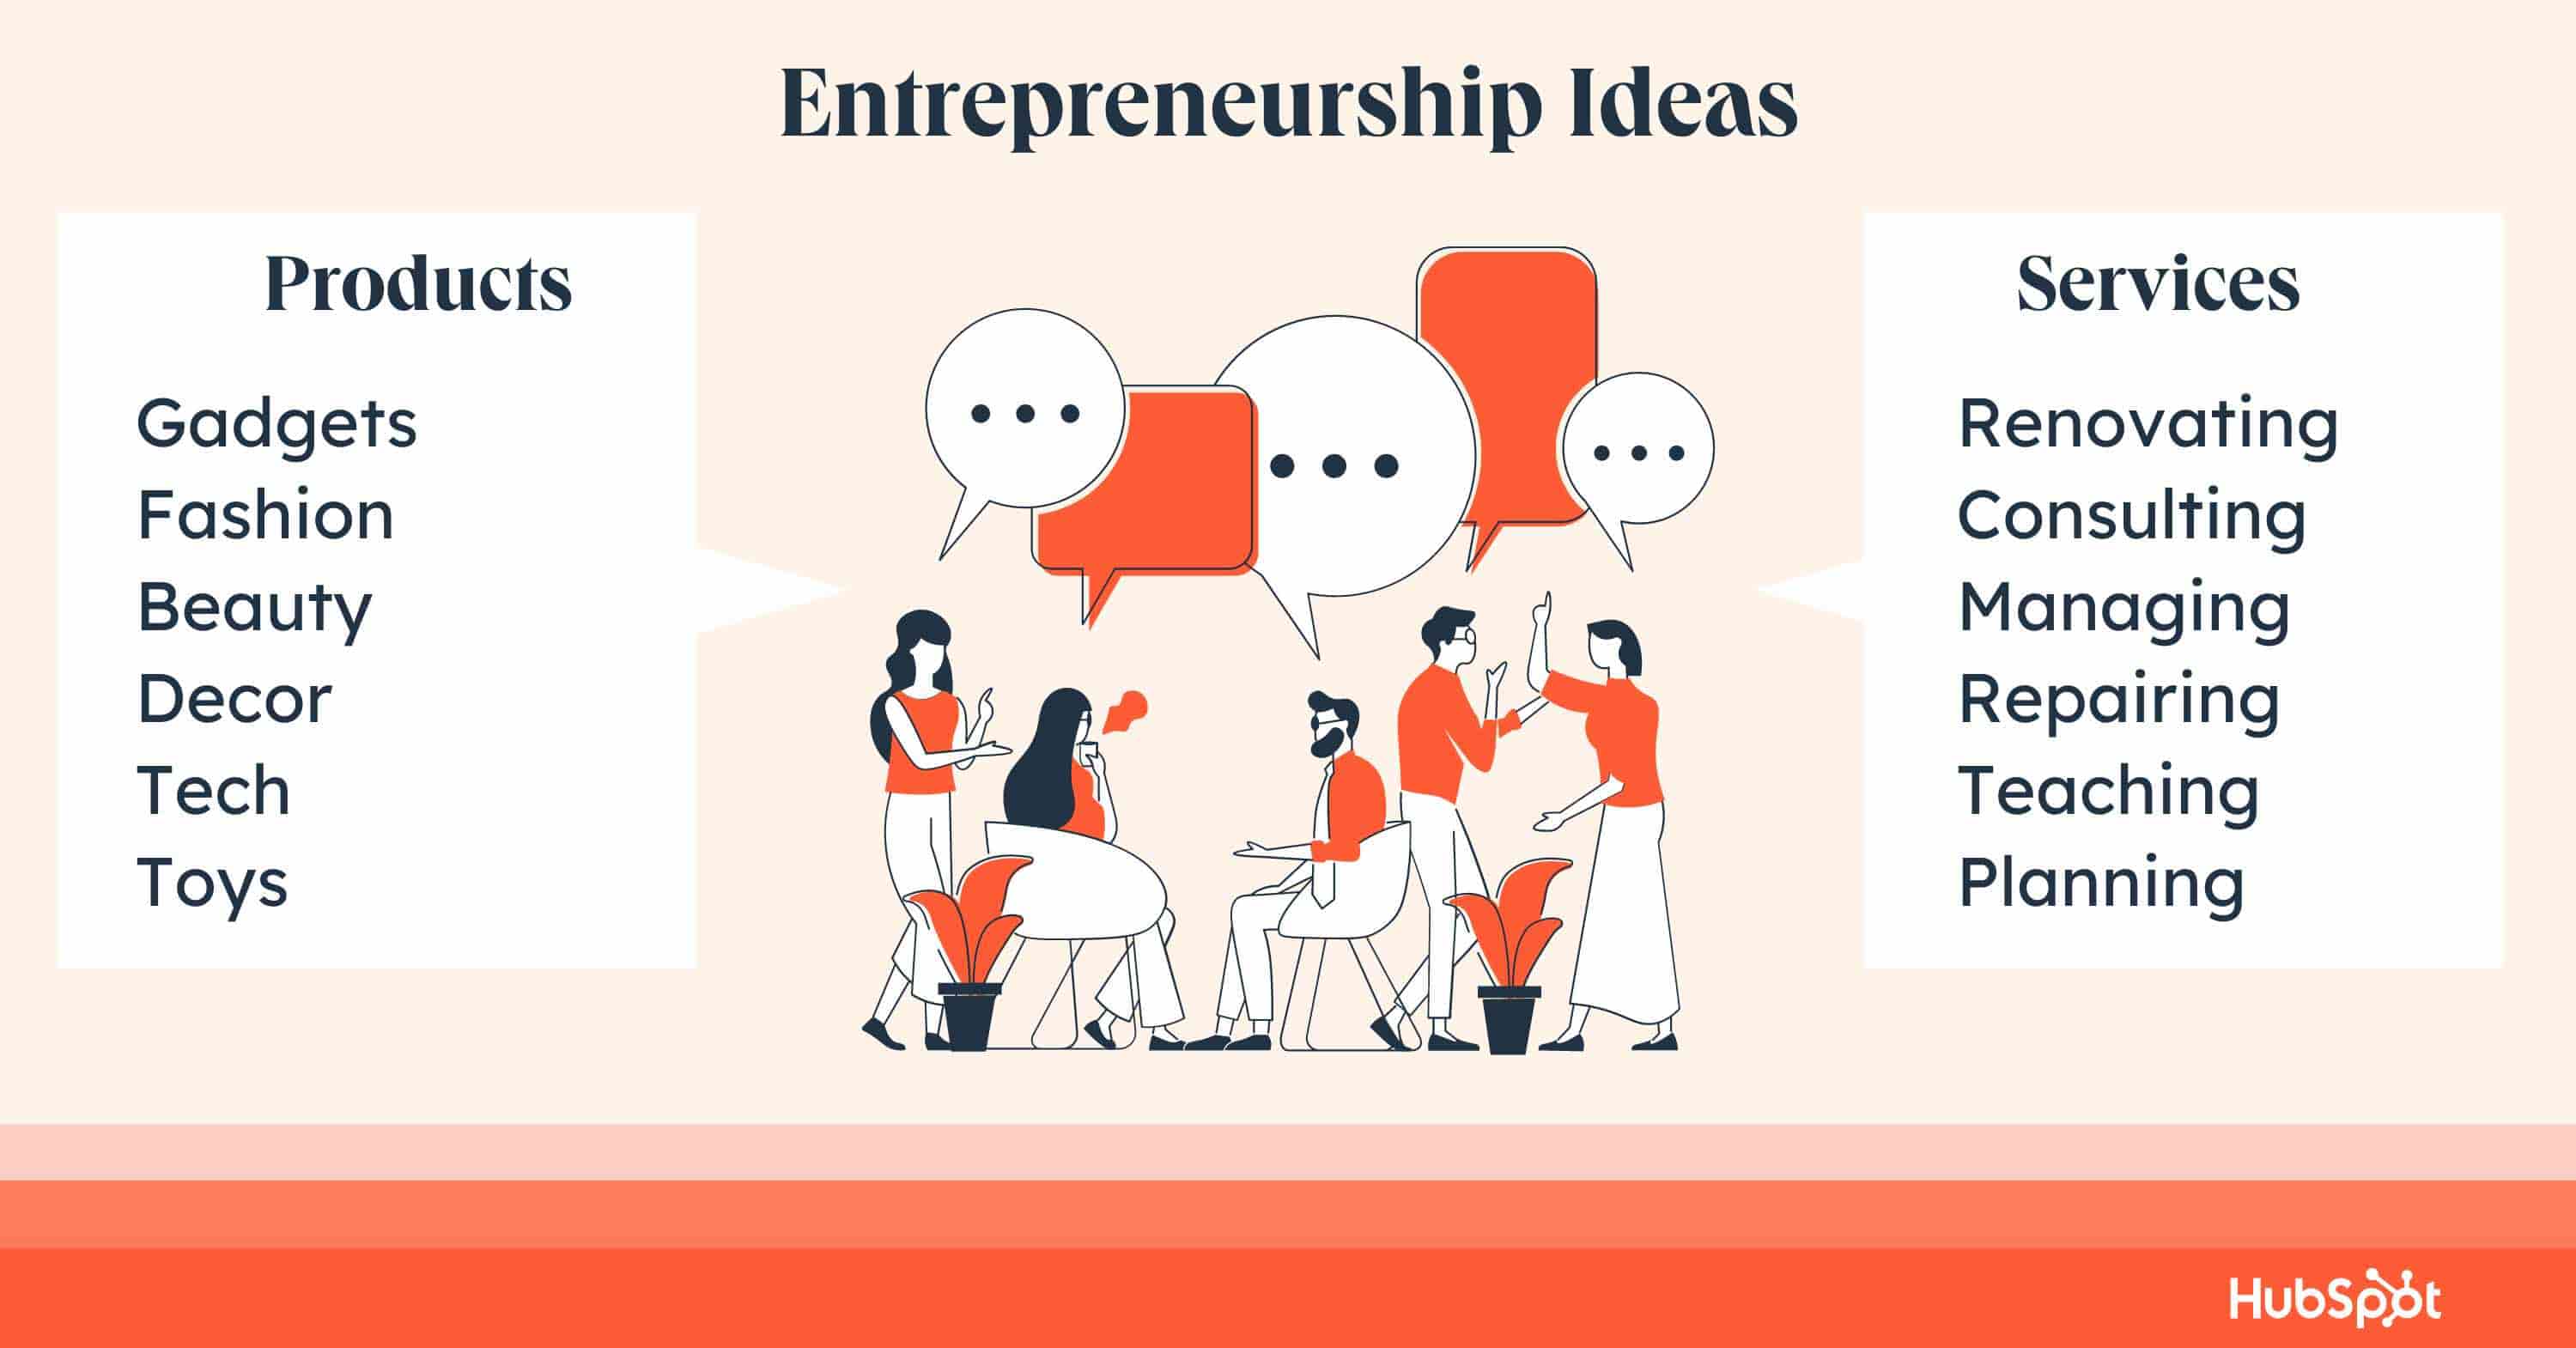 Entrepreneurship ideas, Business Ideas